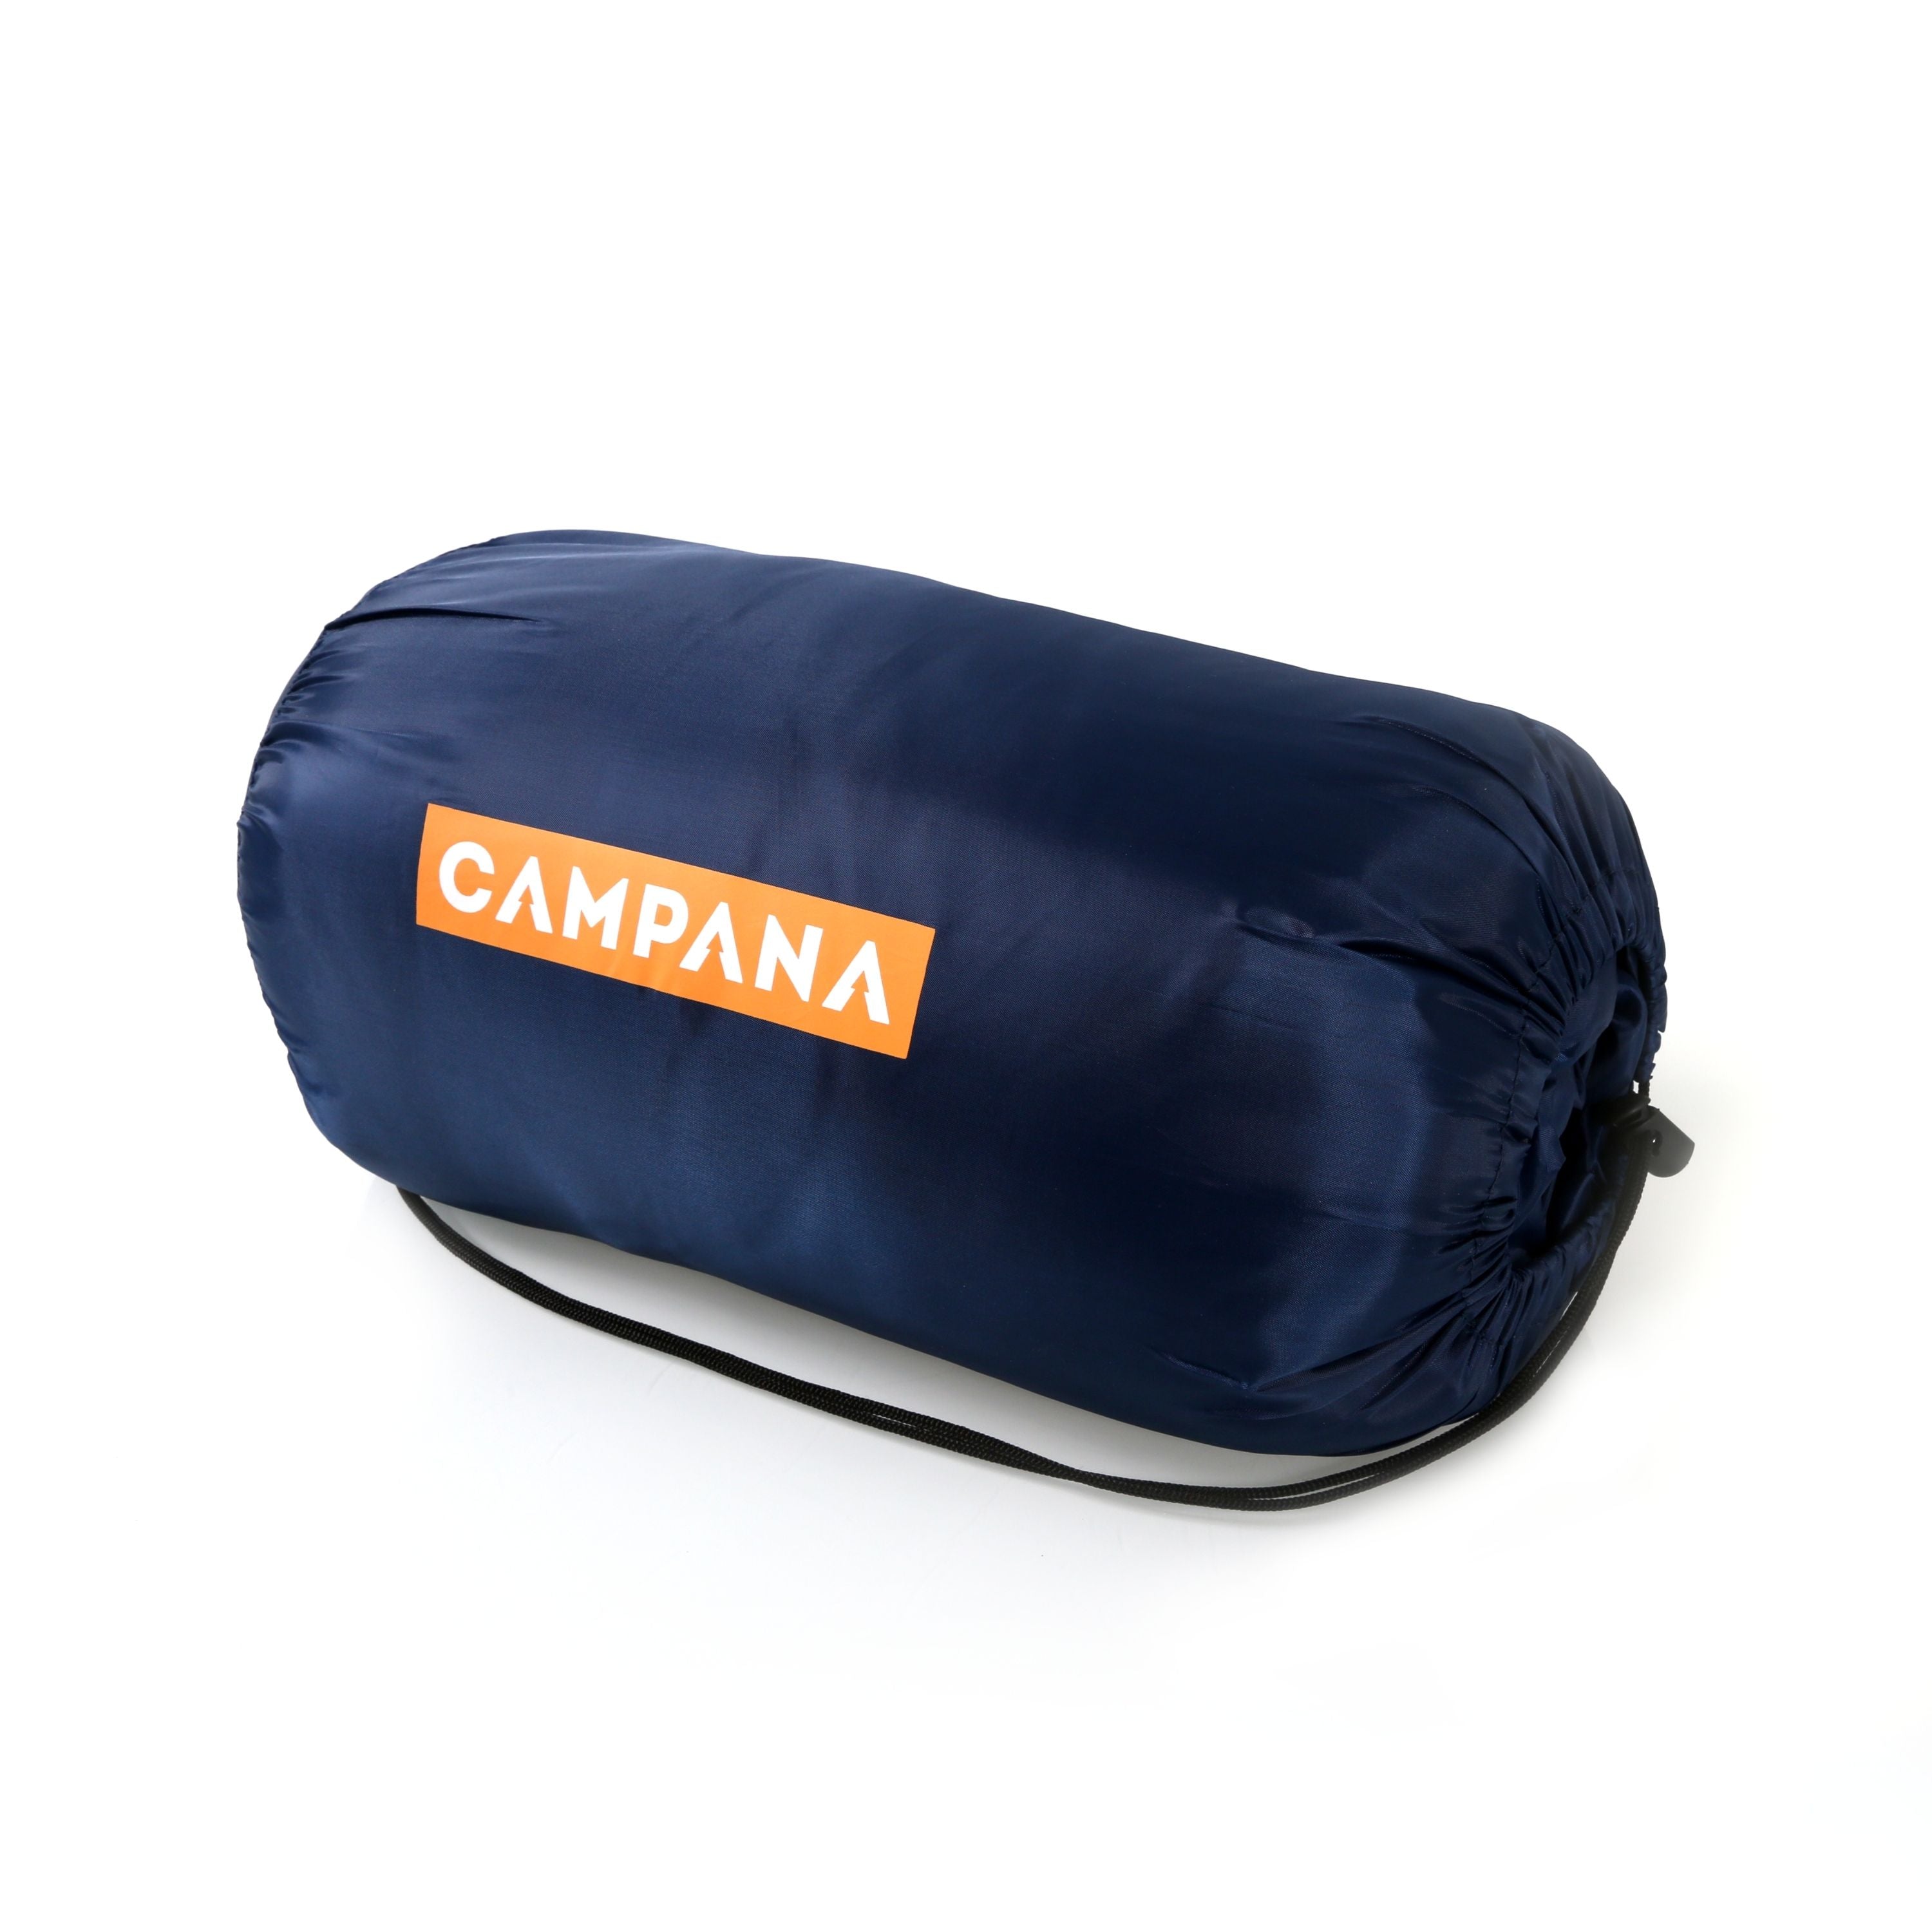 “Campana” sleeping bag